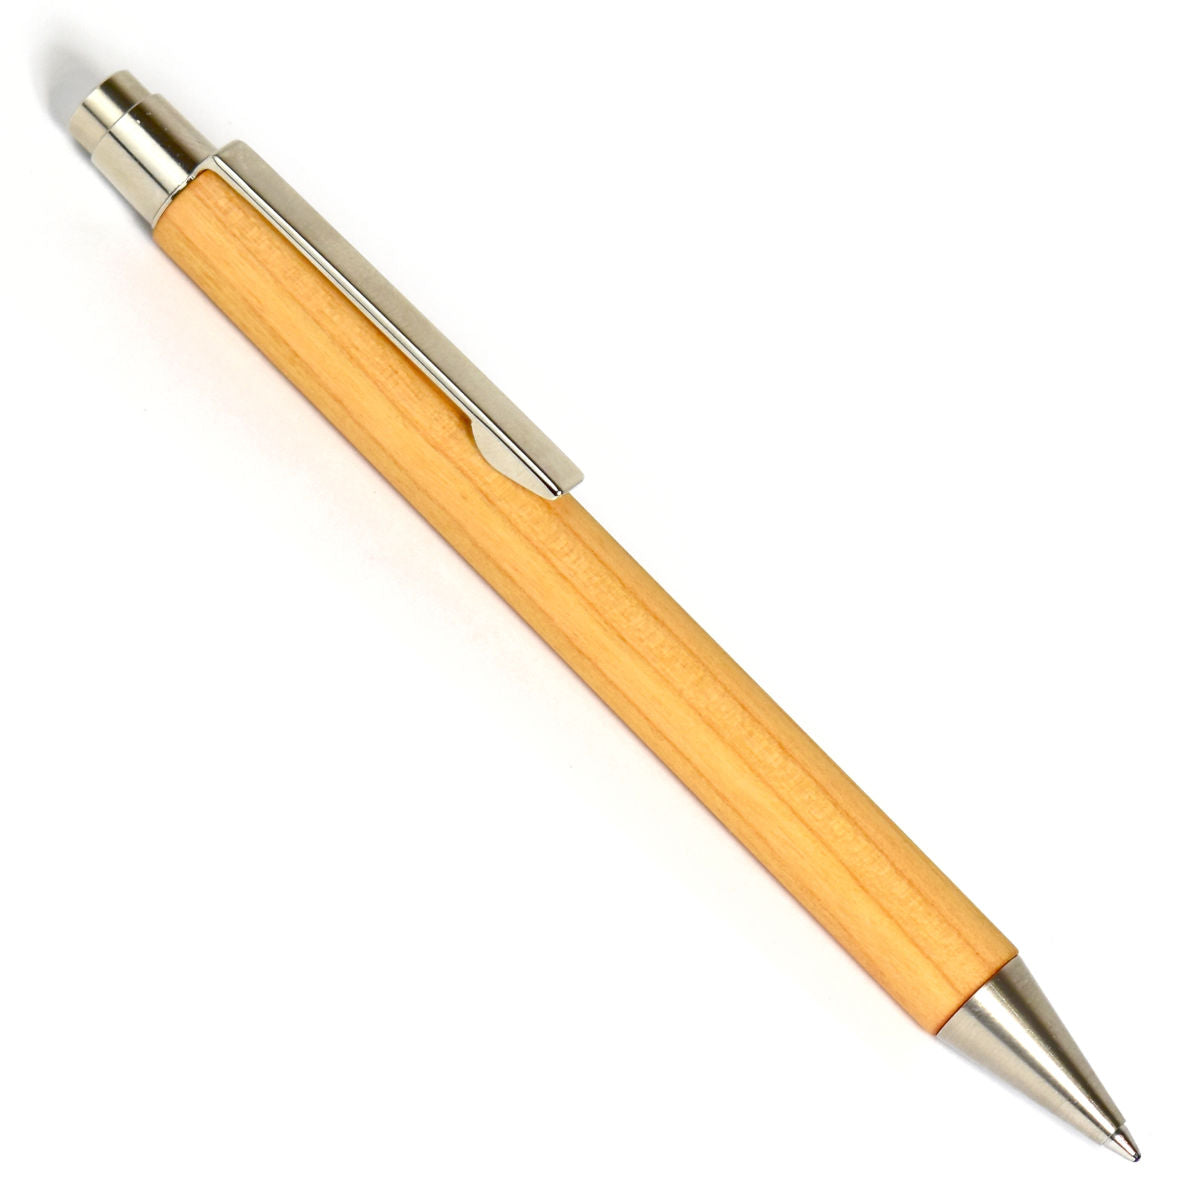 Eleganter Kugelschreiber 'Pen' aus Holz - in verschiedenen Minenstärken